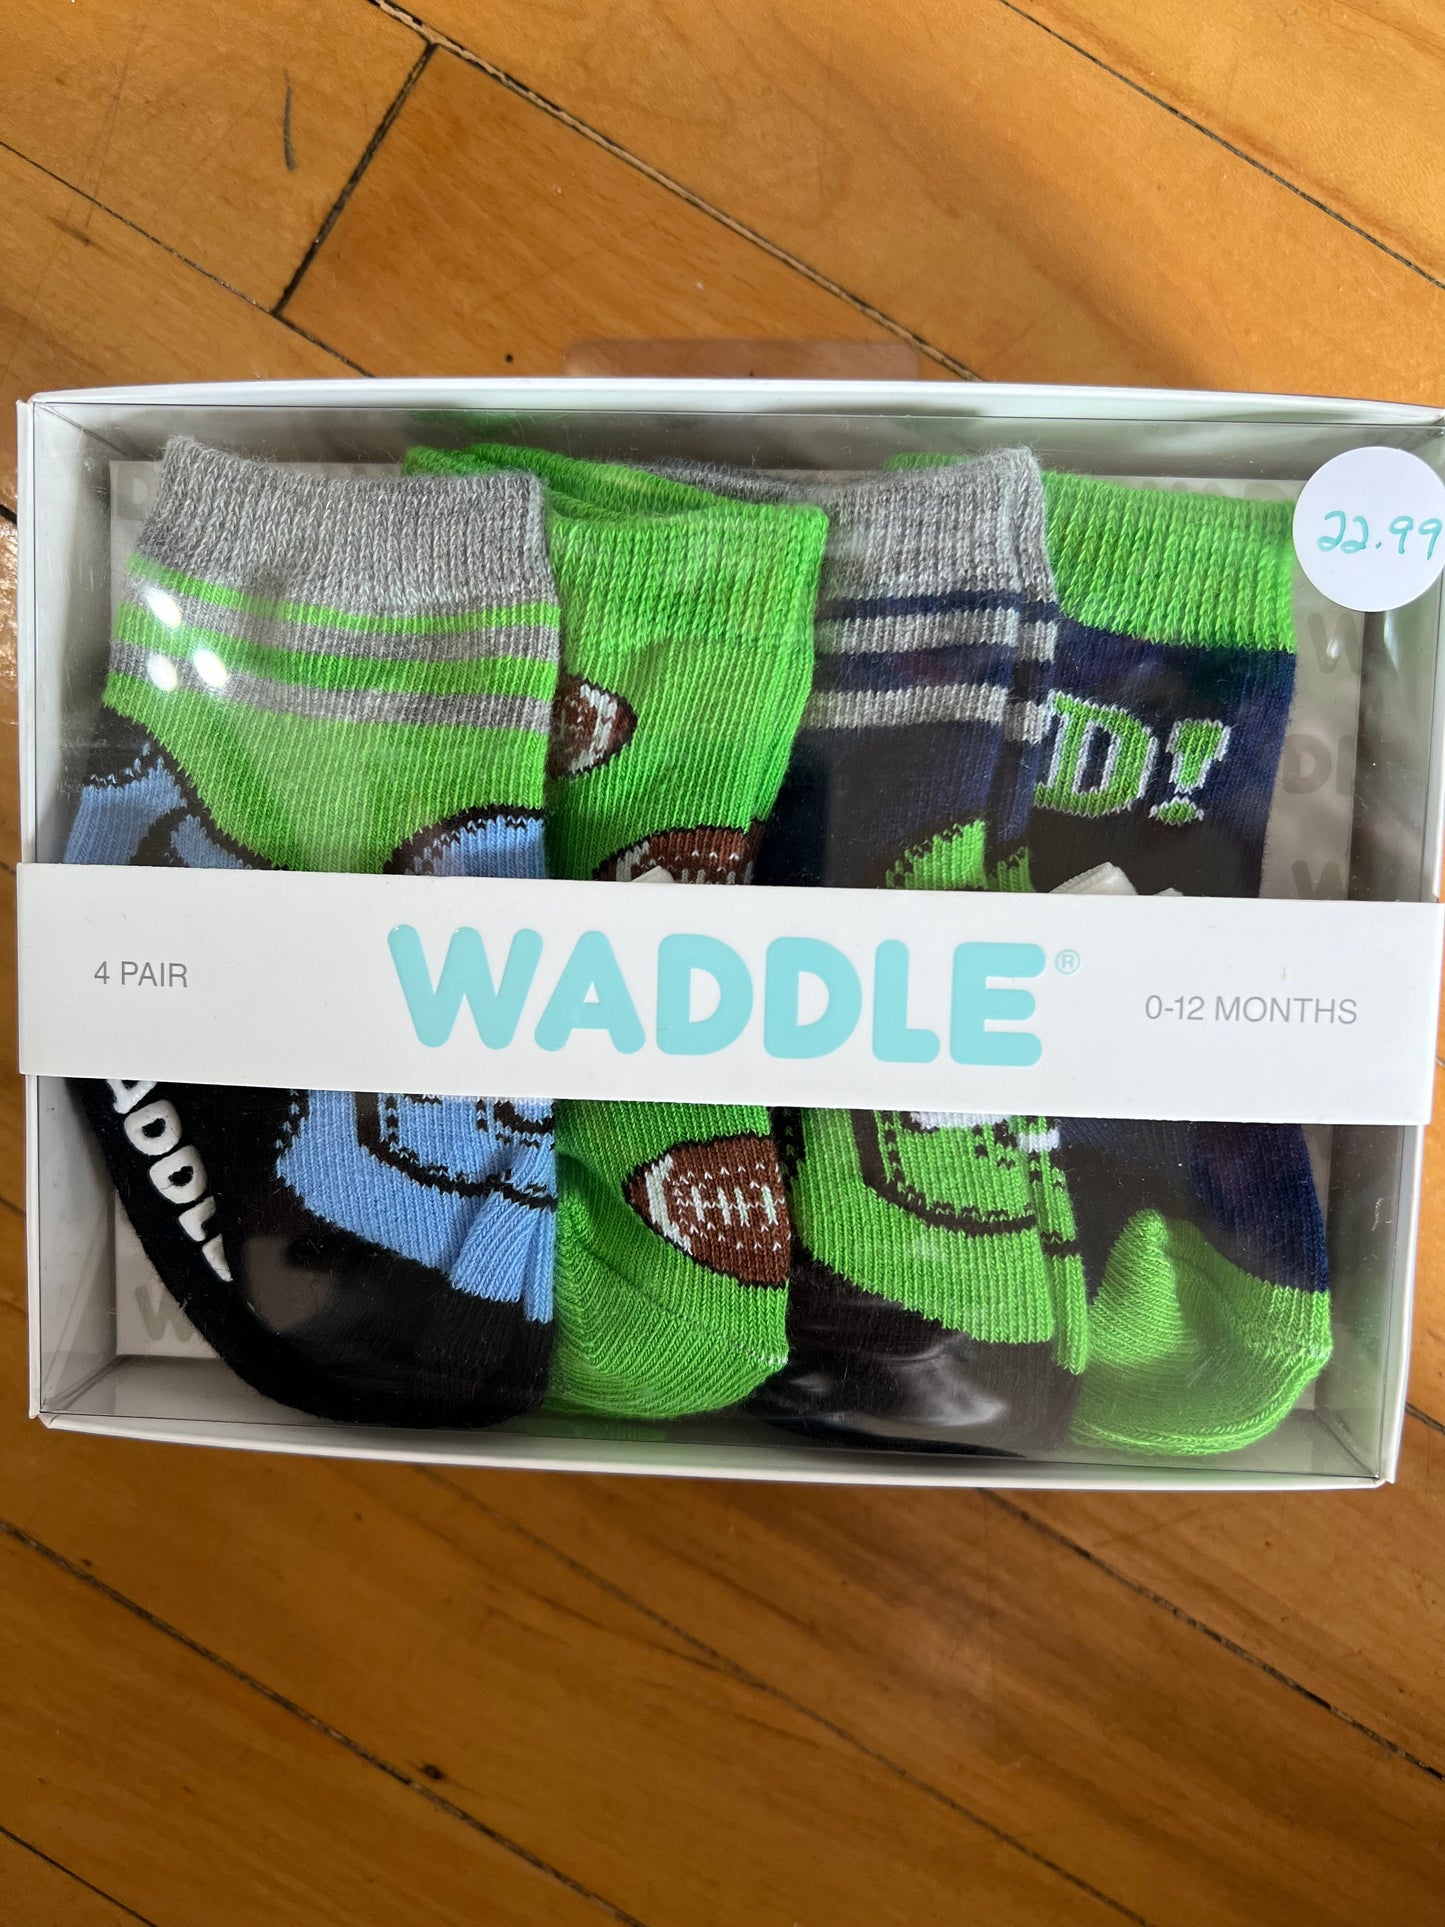 Waddle baby socks